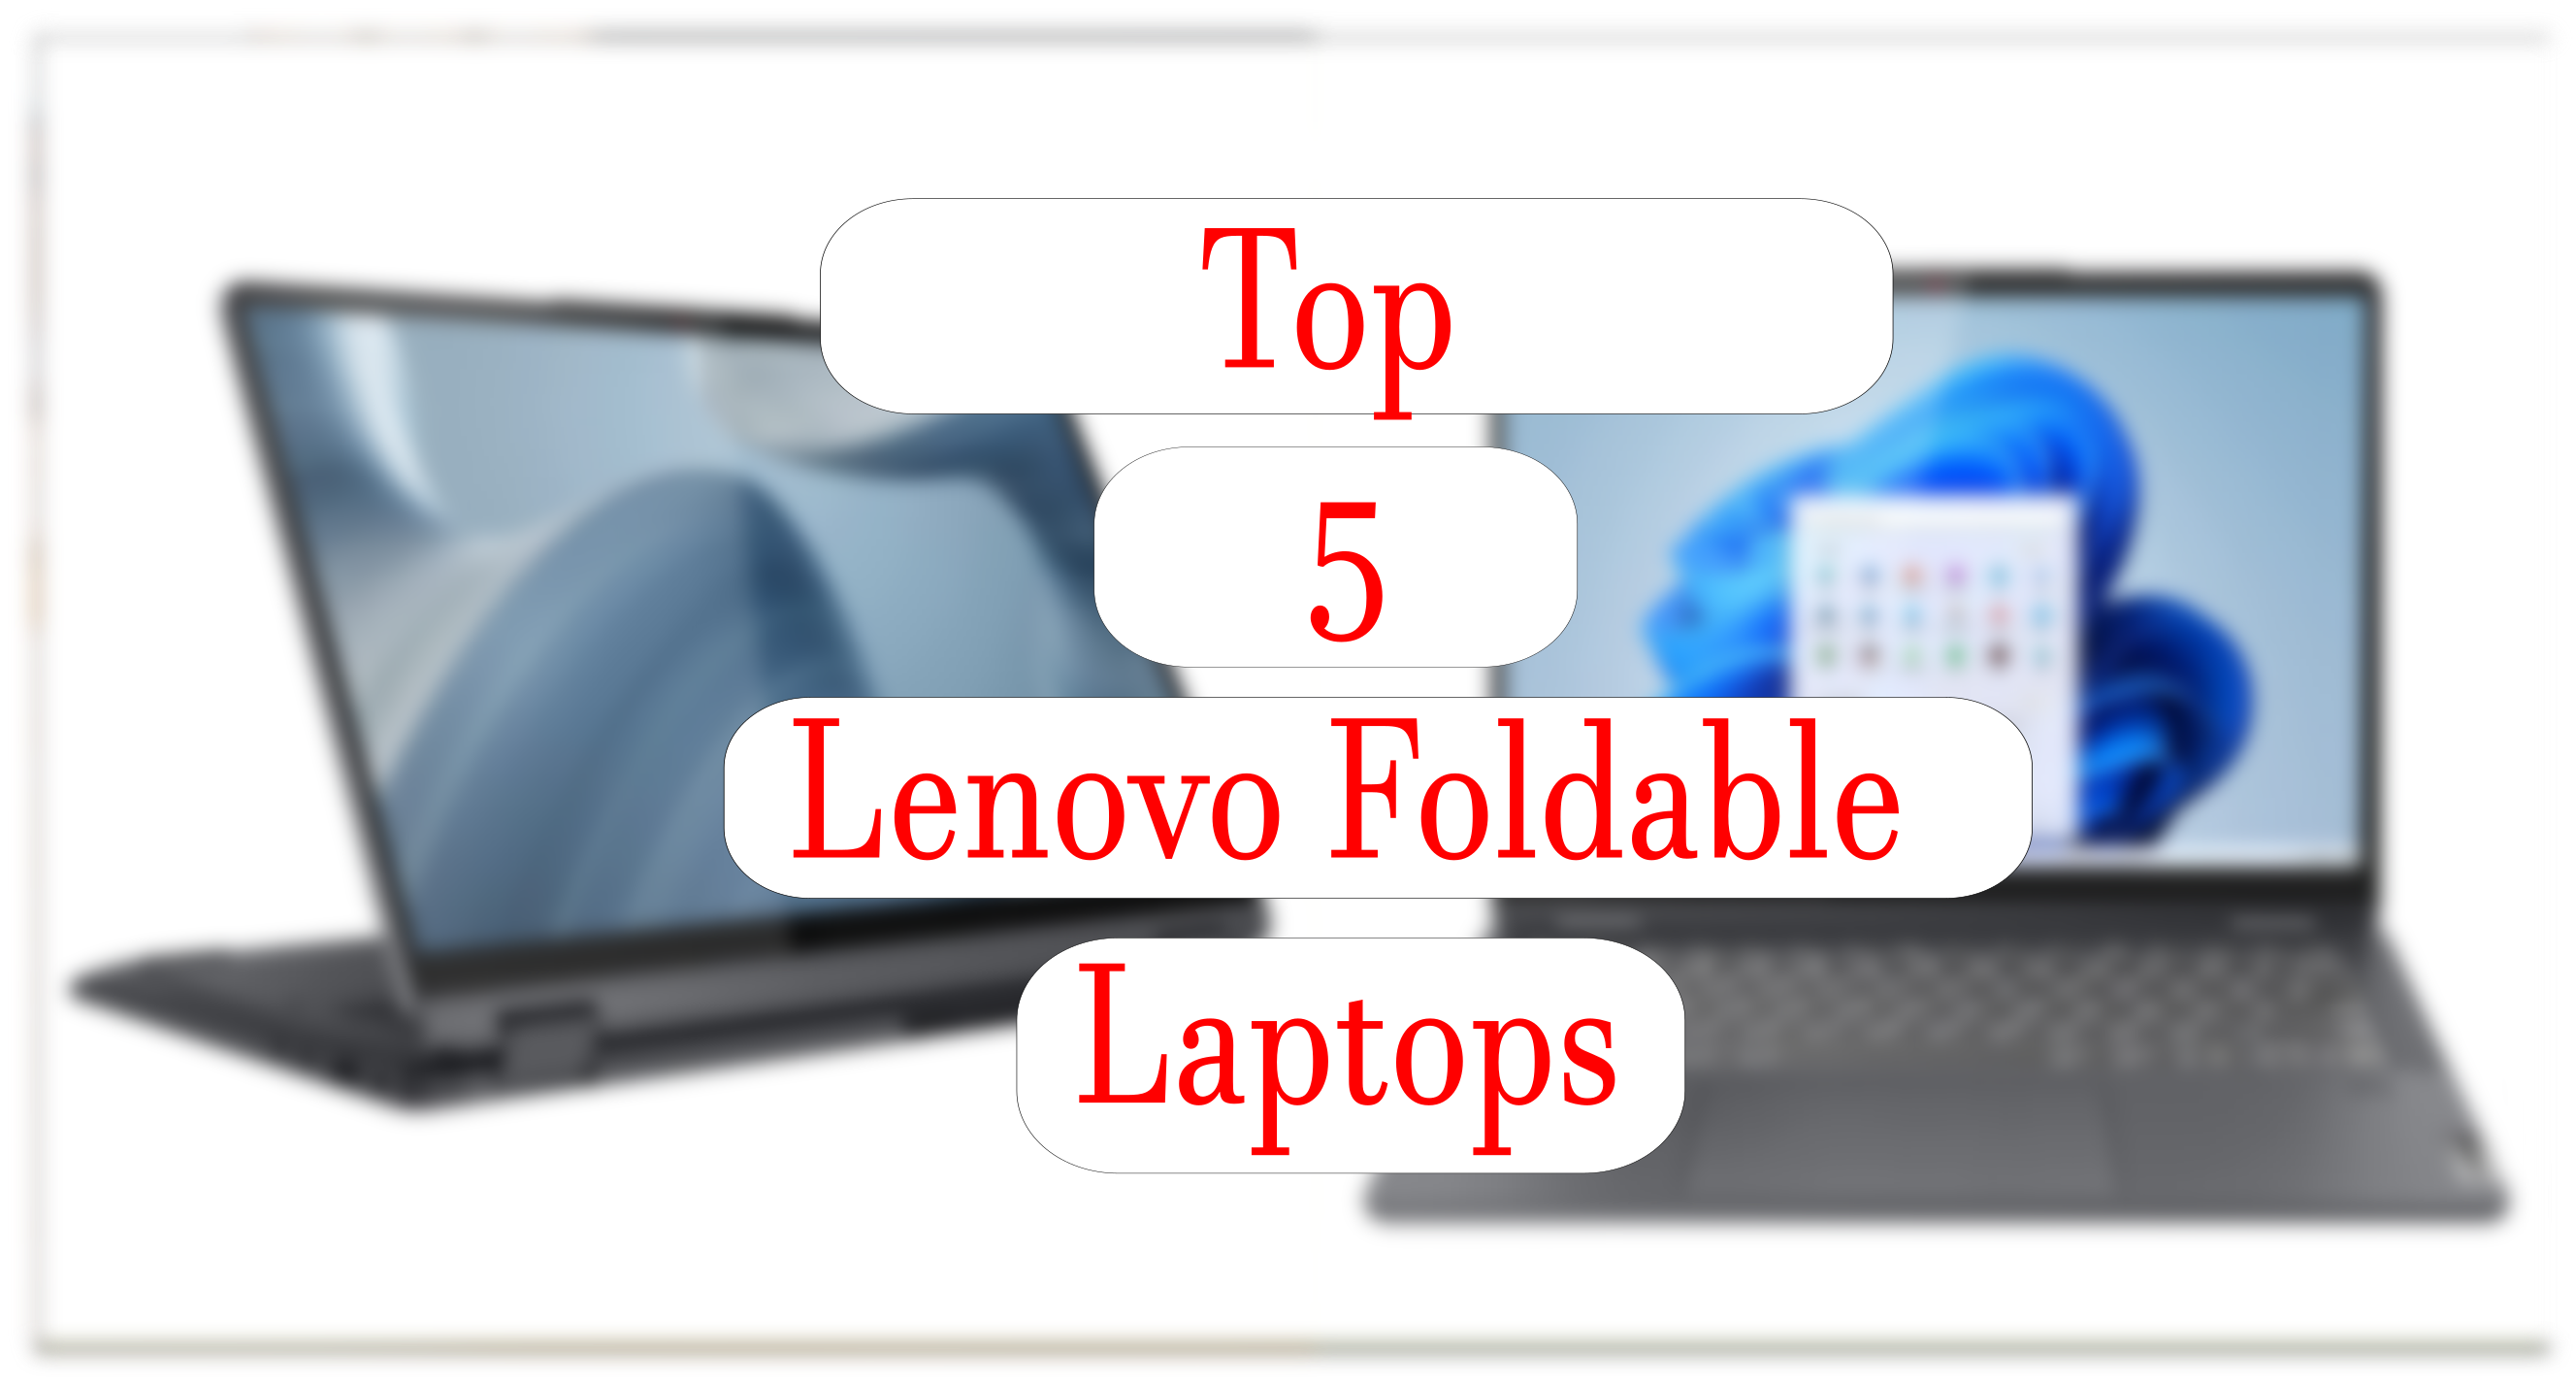 Top 5 lenovo foldable laptops